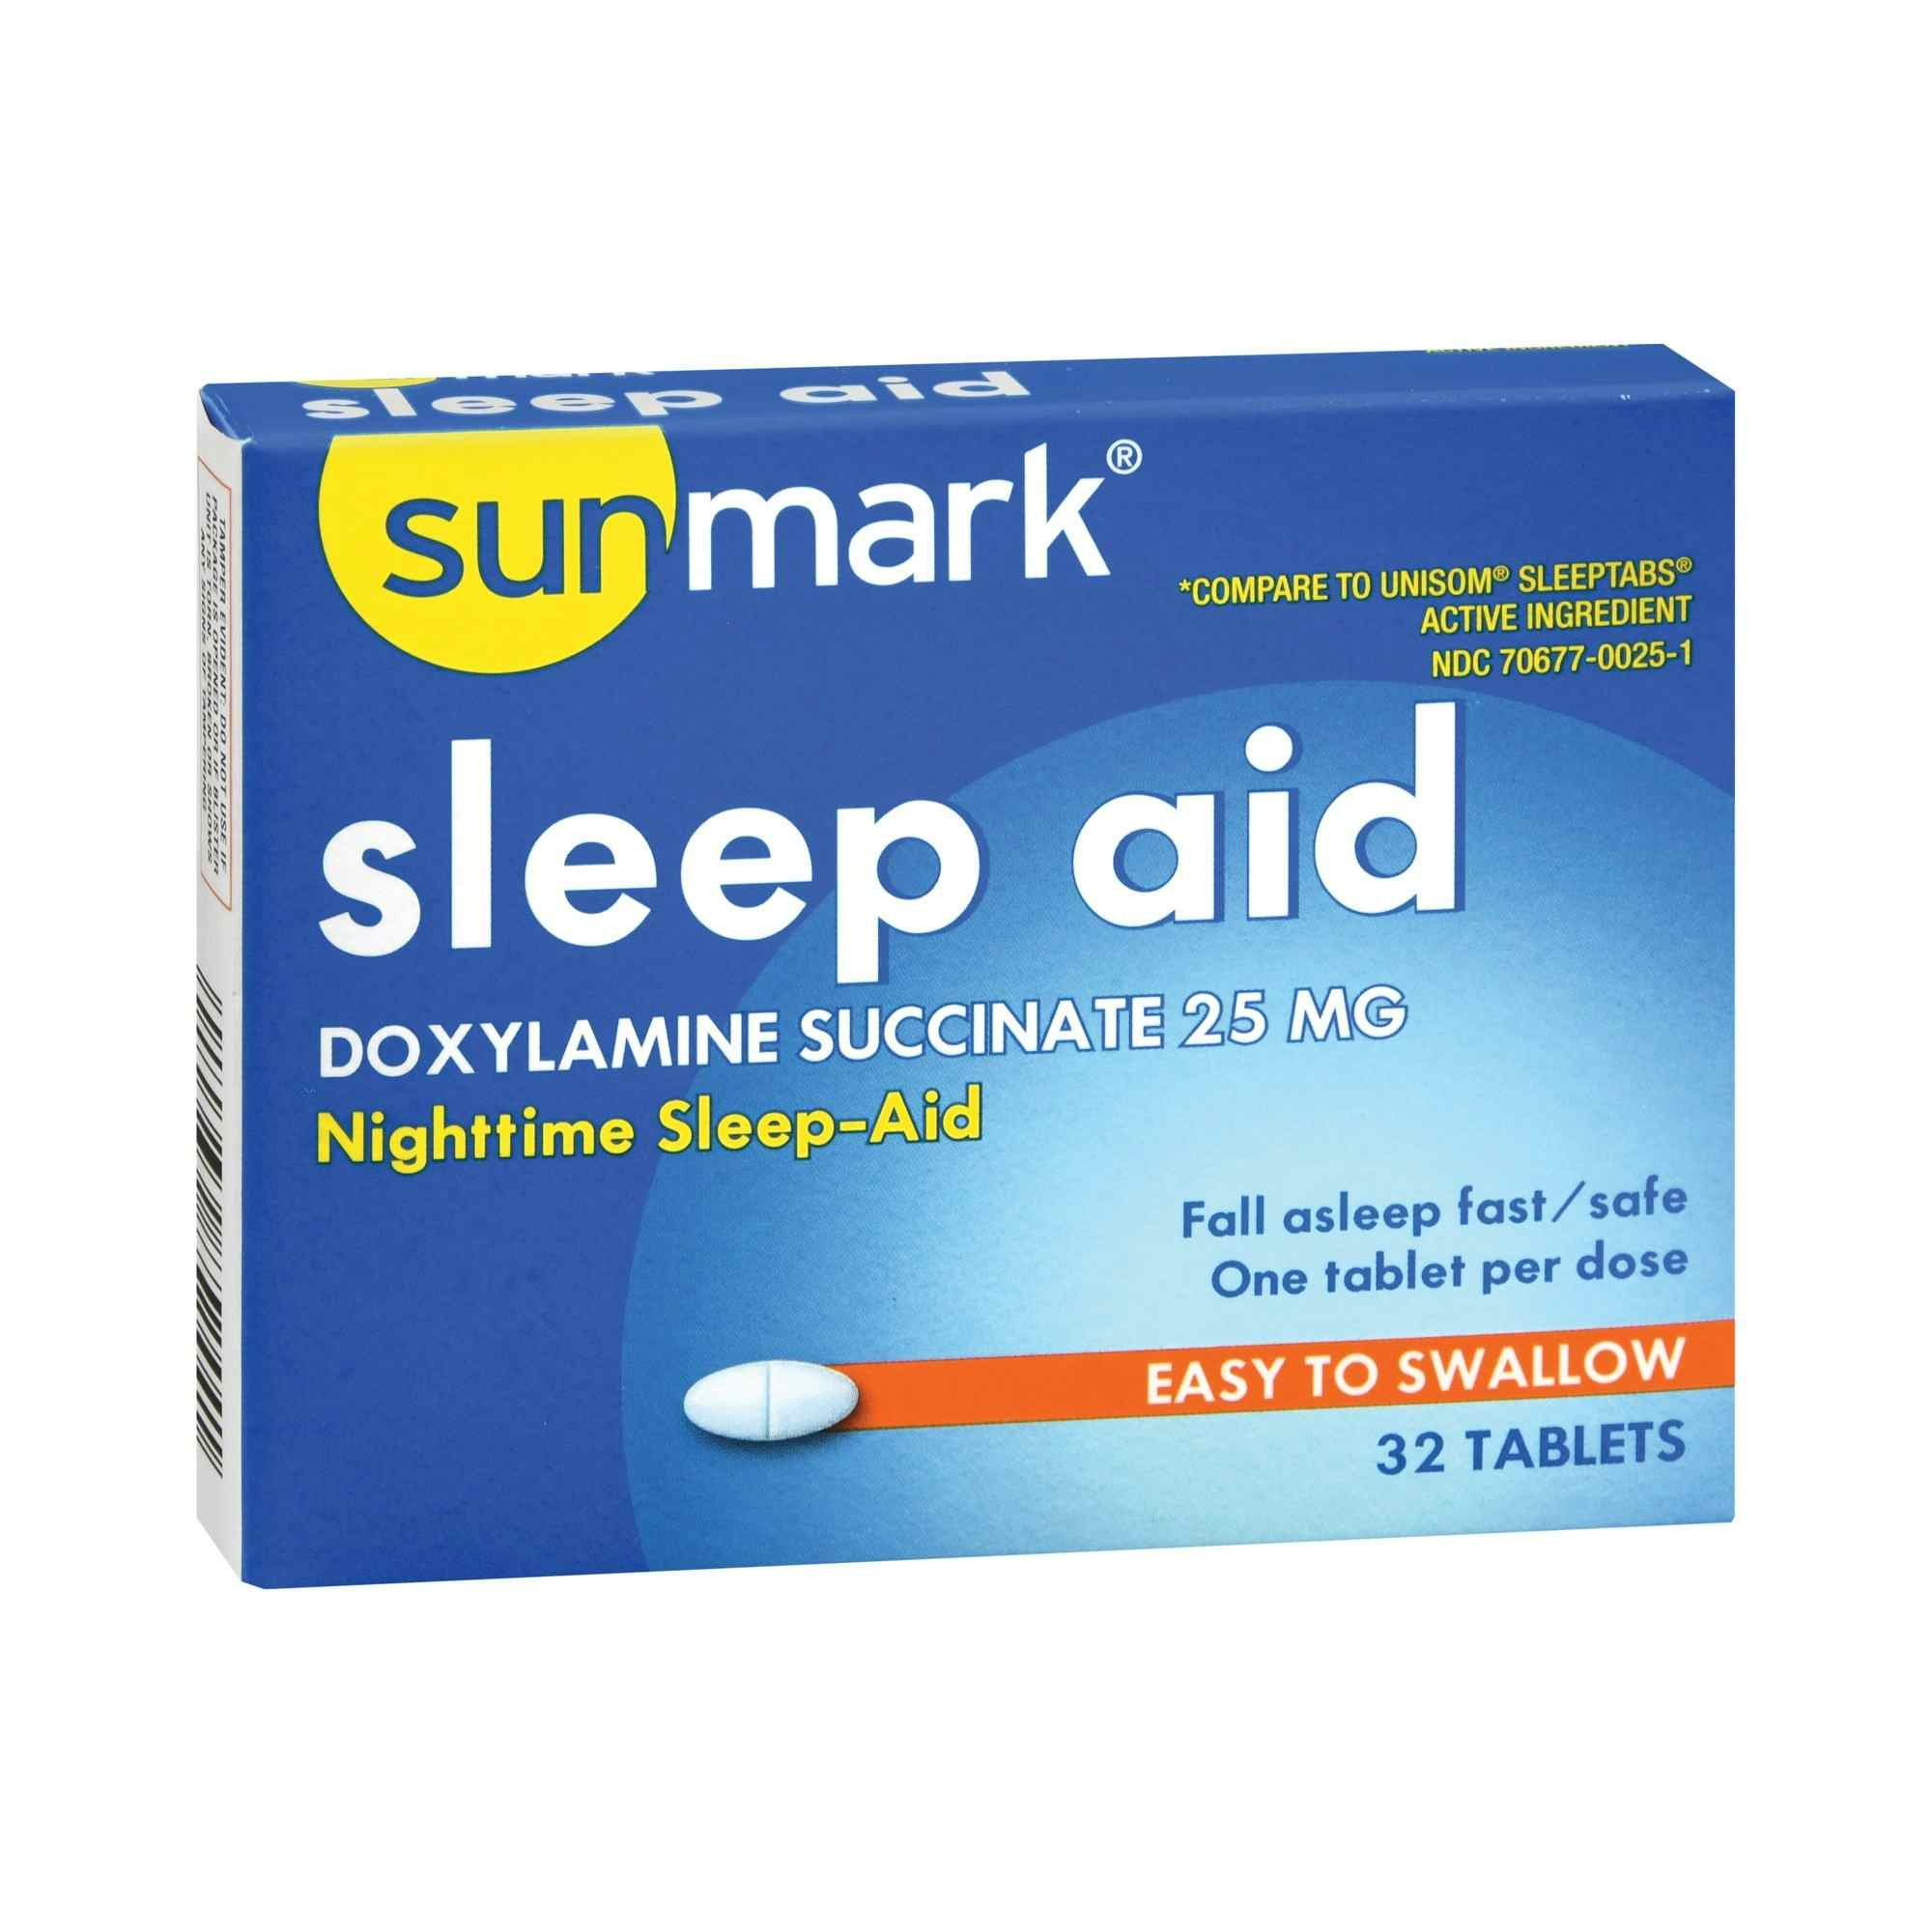 sunmark Nighttime Sleep Aid, 25 mg, 32 Tablets, 70677006801, 1 Box